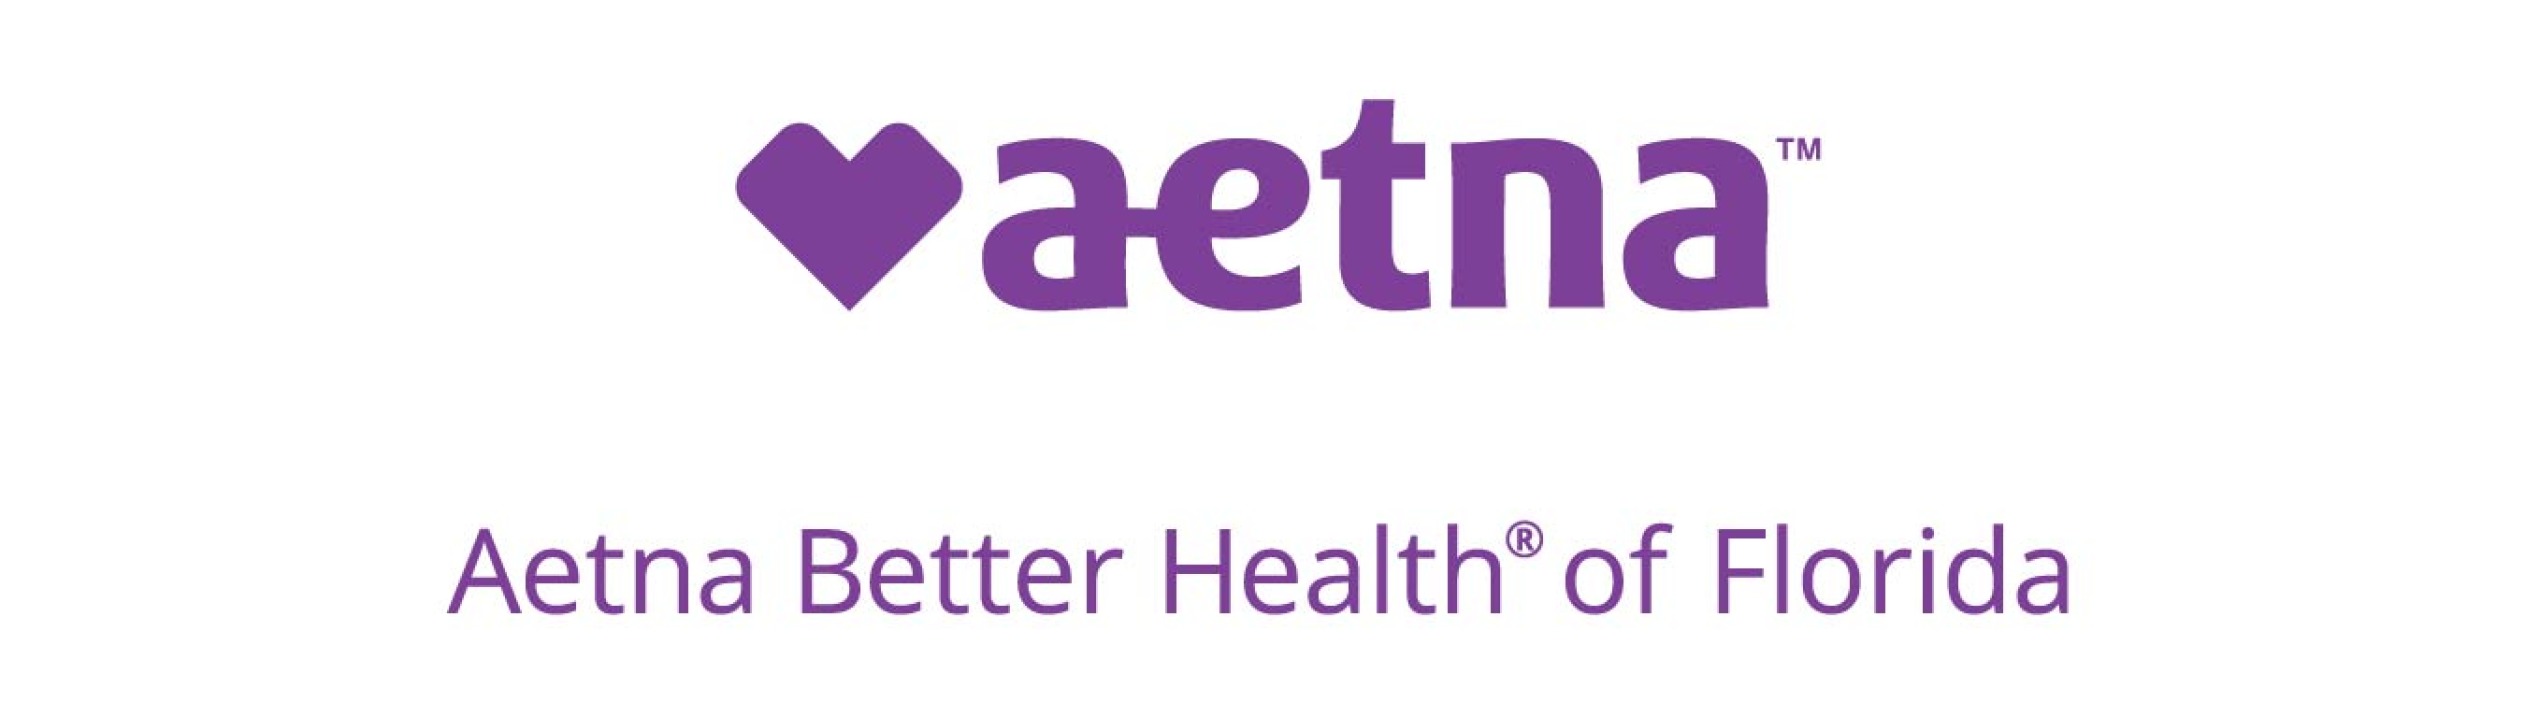 Aetna Better Health of Florida logo